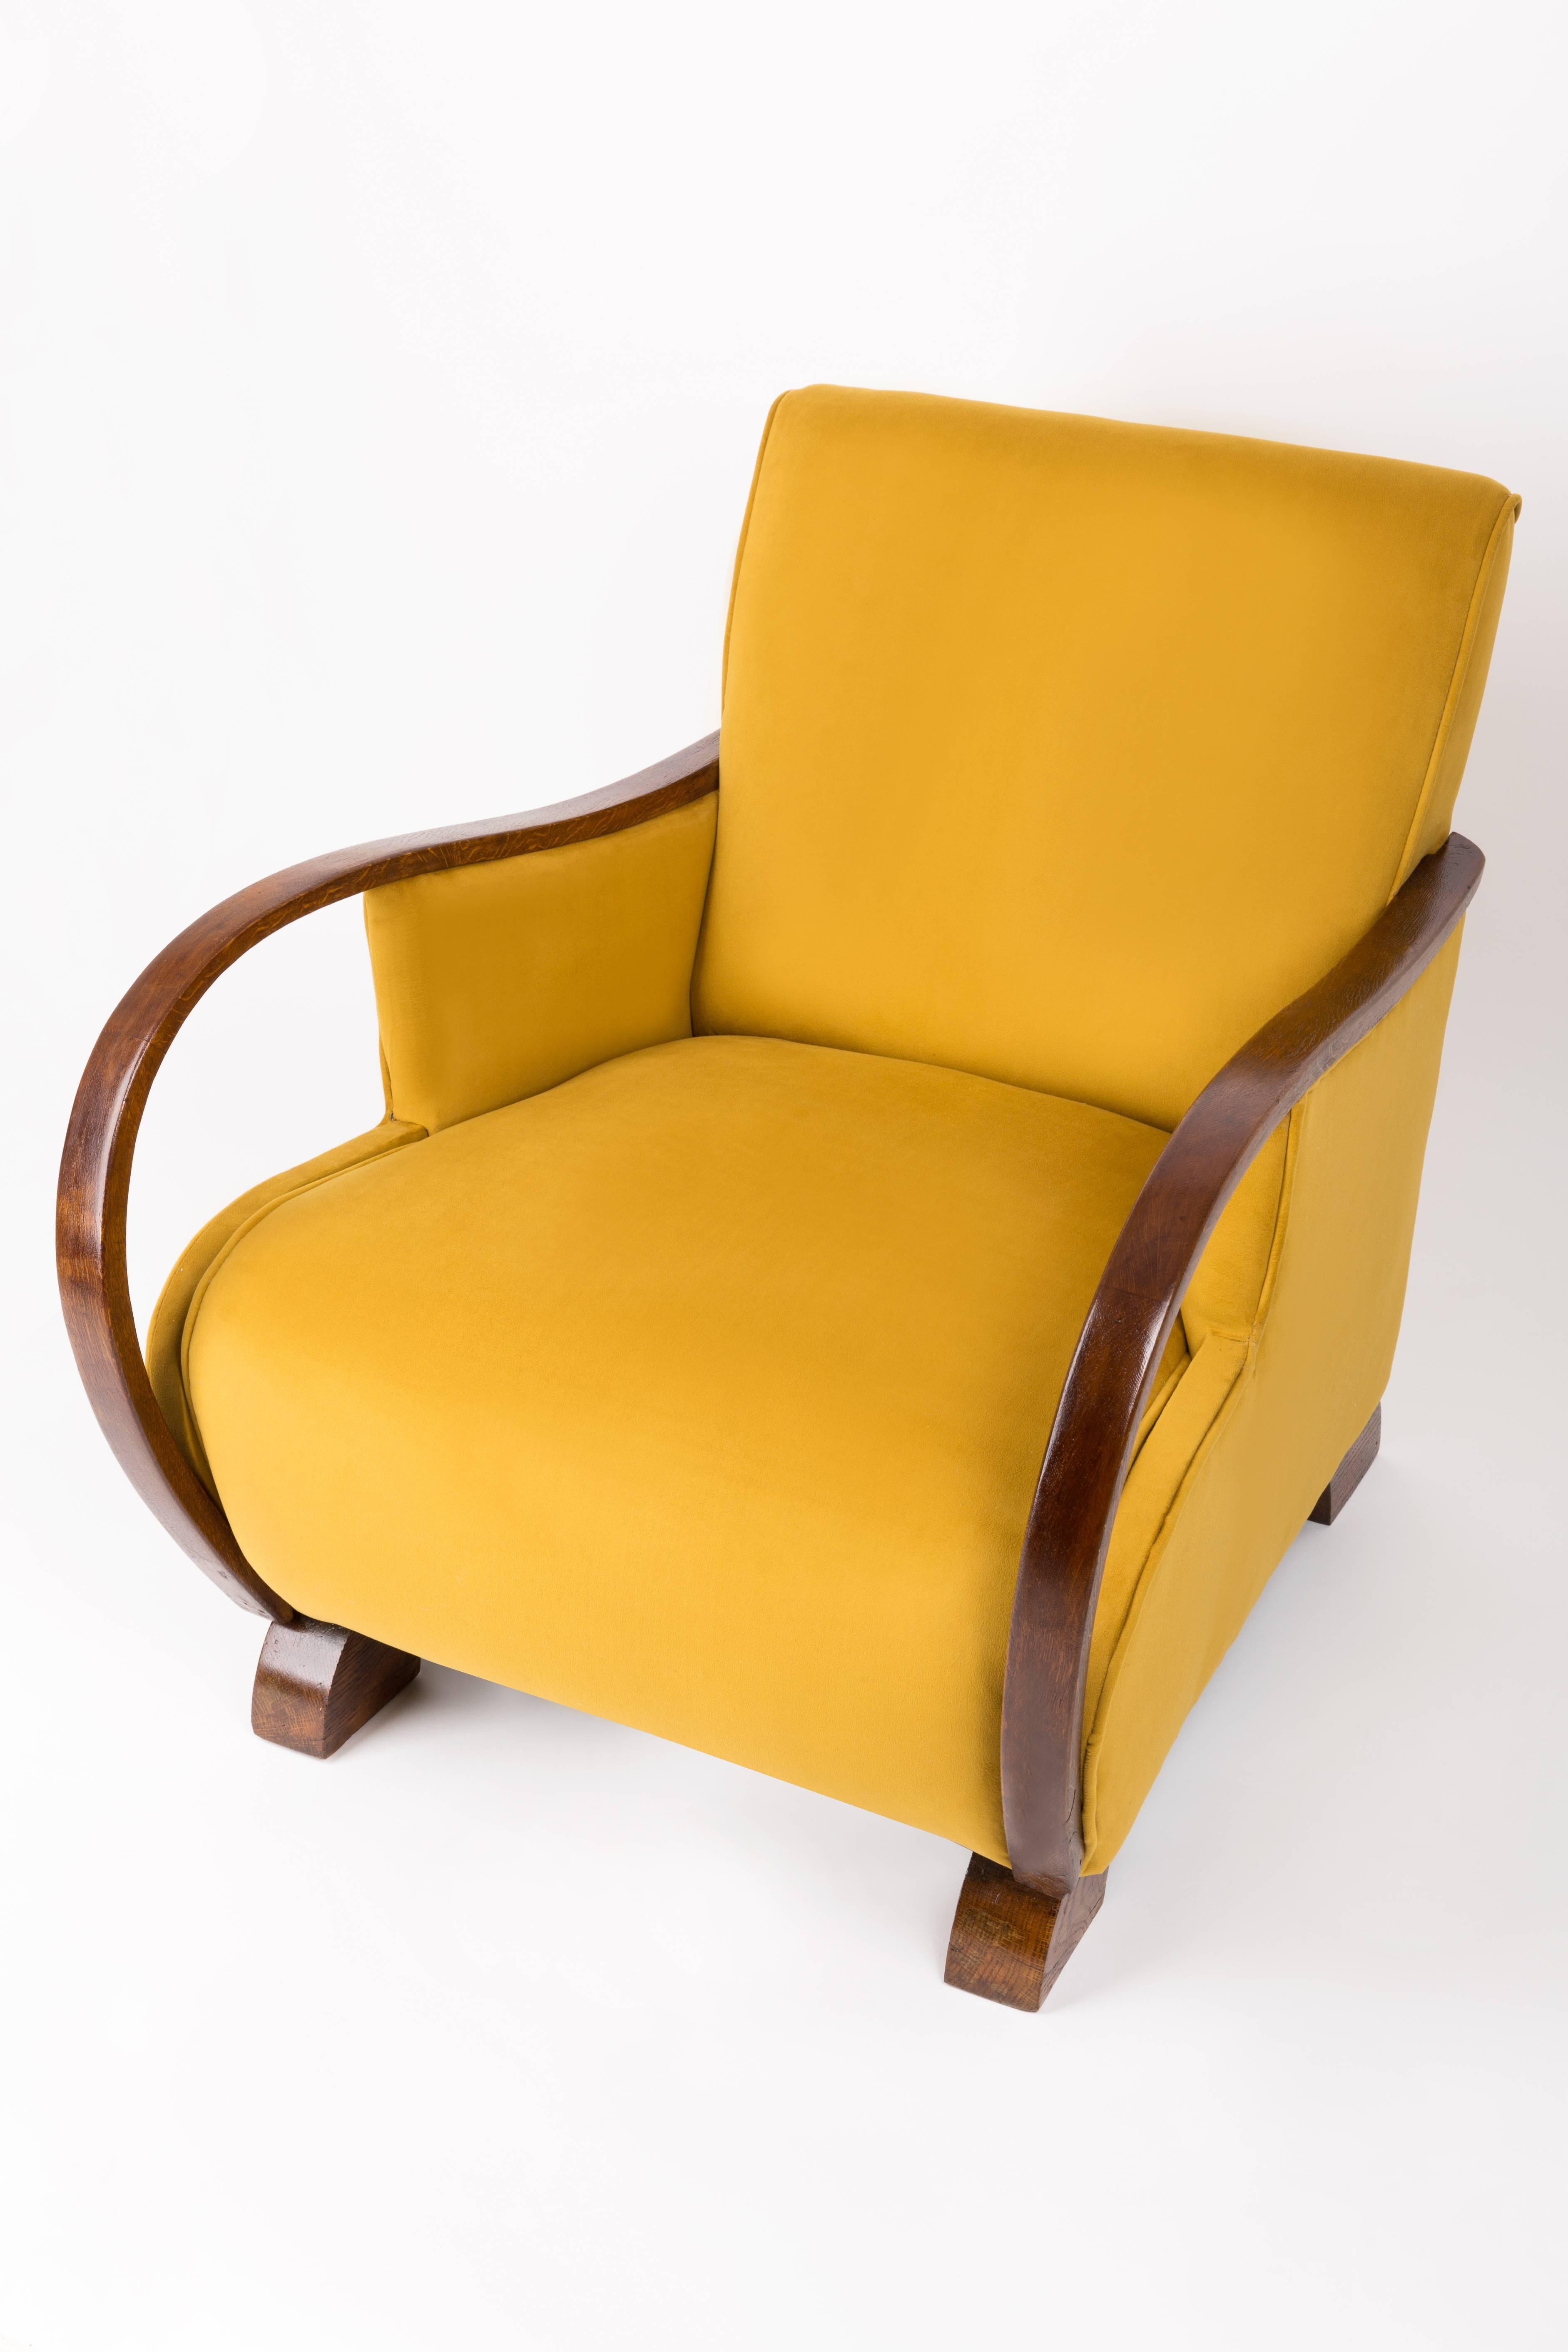 Gelber großer Vintage-Sessel im Art déco-Stil, 1920er Jahre (20. Jahrhundert) im Angebot